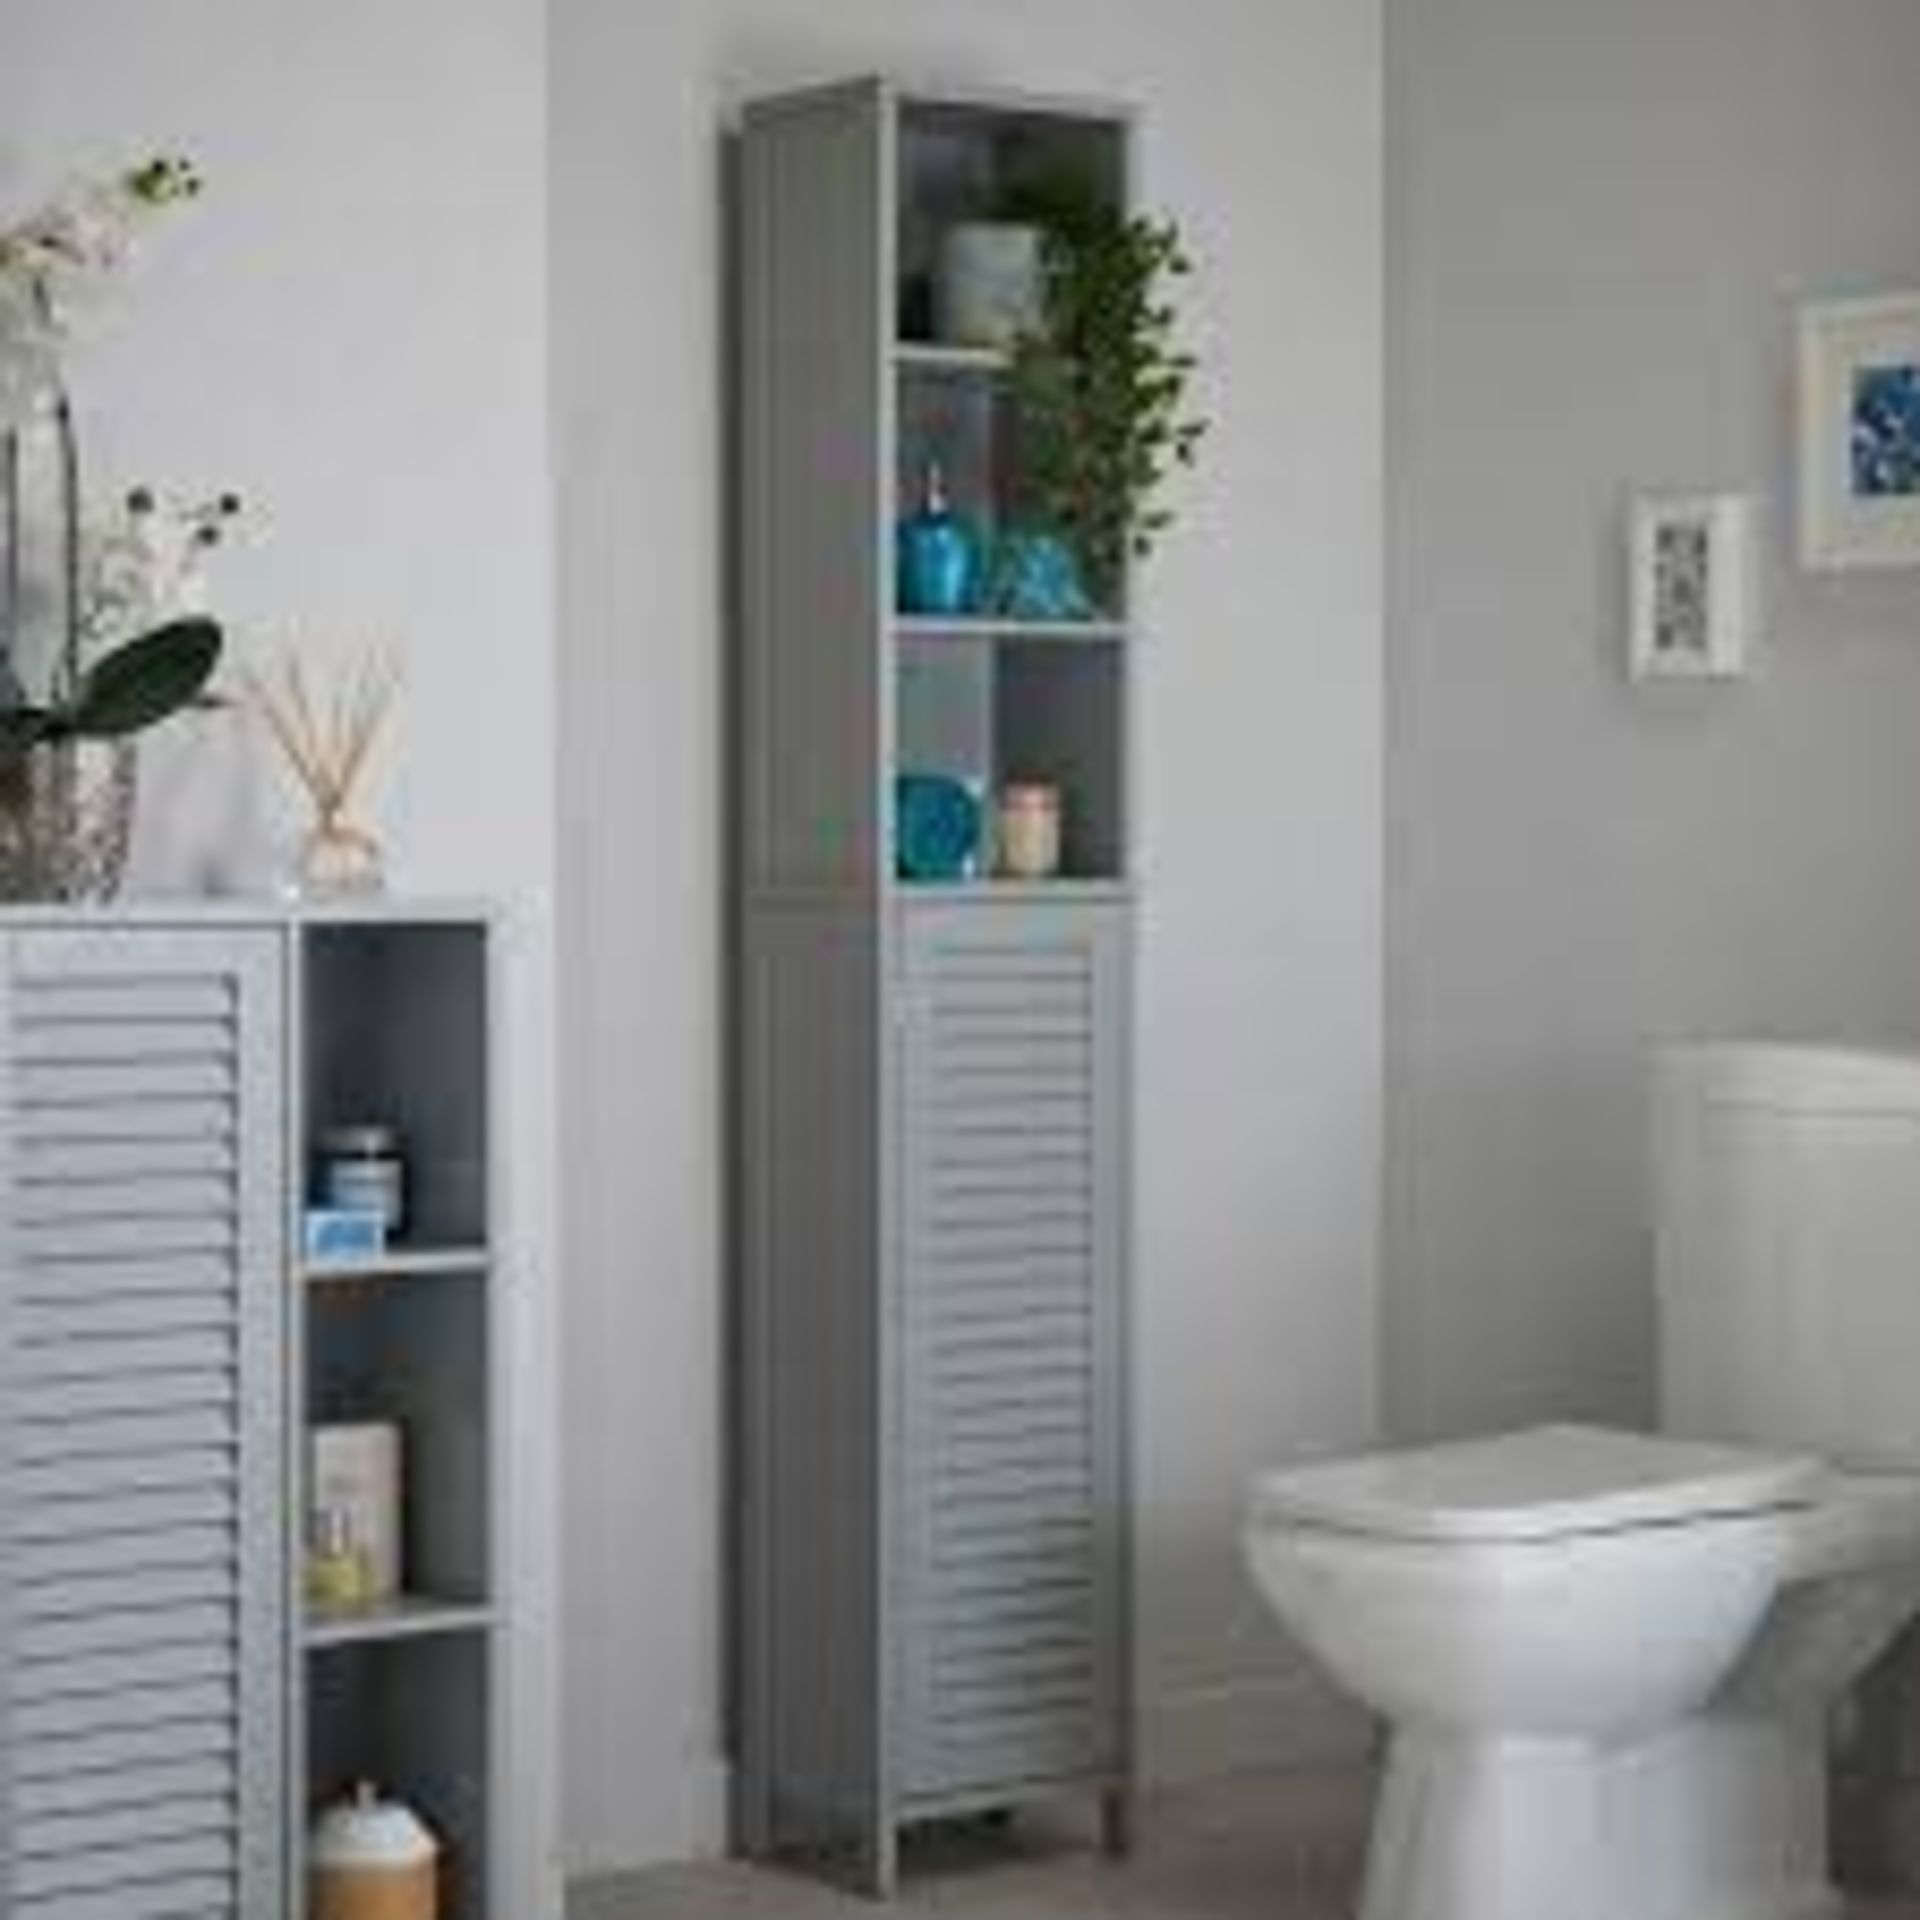 Marcus Grey Slatted Bathroom Tallboy Storage Cabinet. - SR3. A timeless storage solution that can